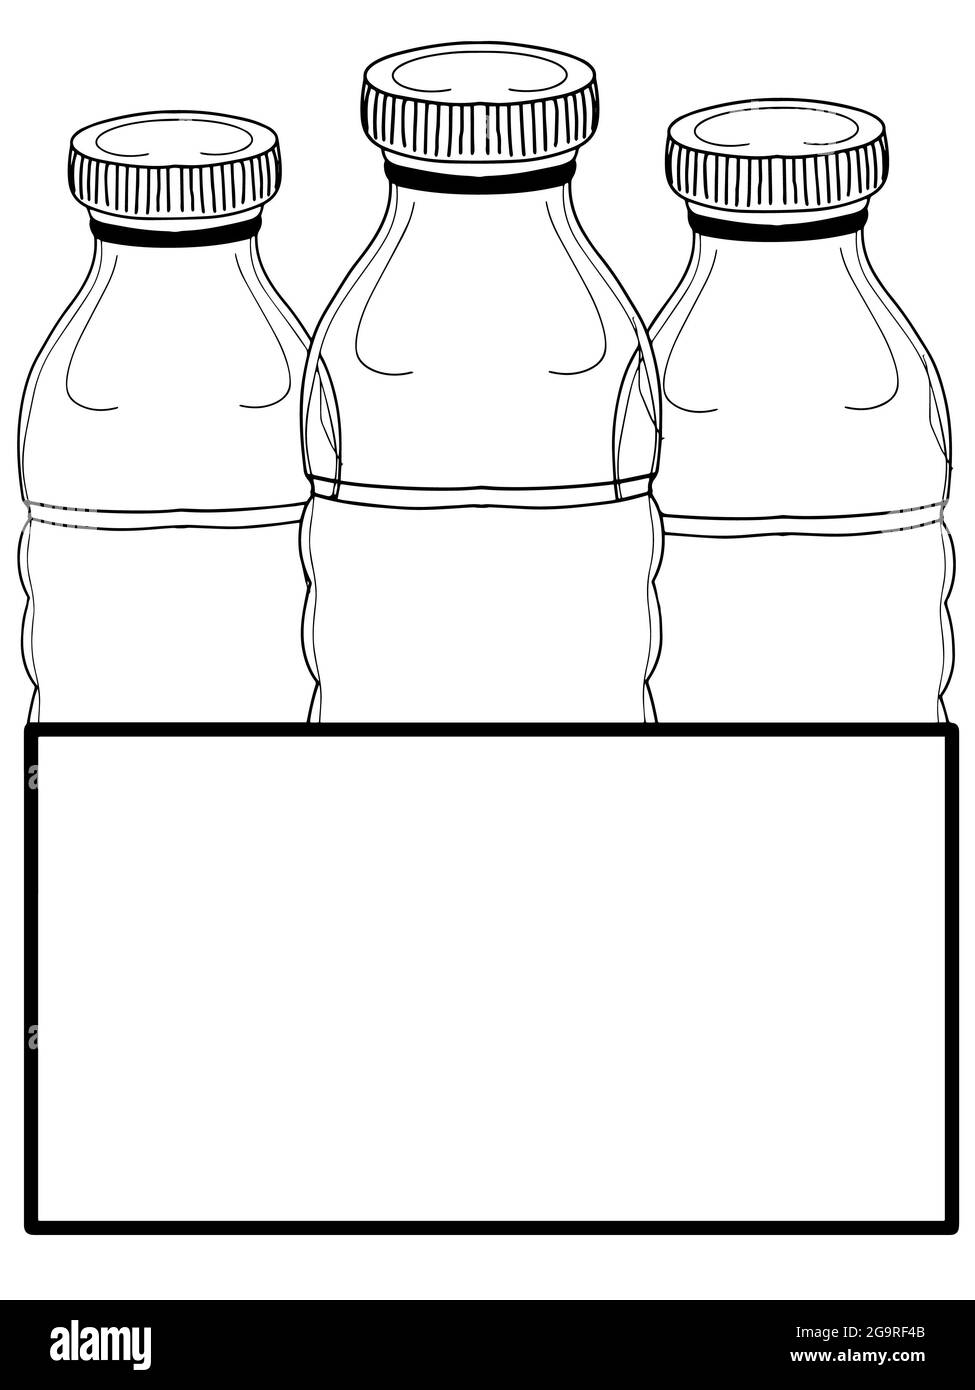 water bottles, banner  ,illustration drawing, Stock Photo